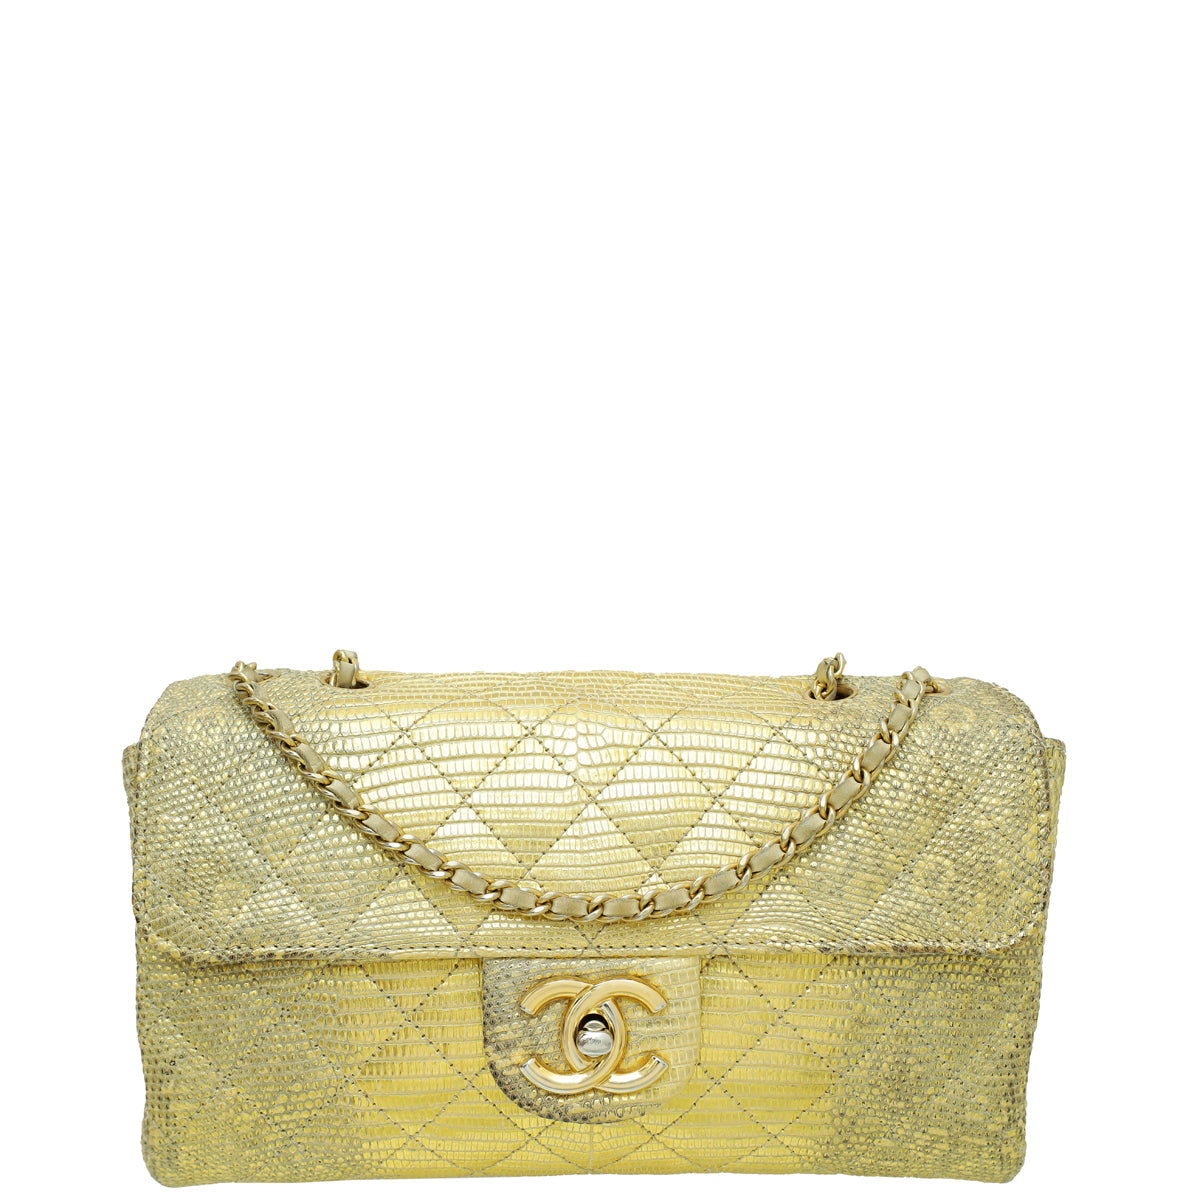 Chanel Gold CC Metallic Lizard Accordion Flap Bag